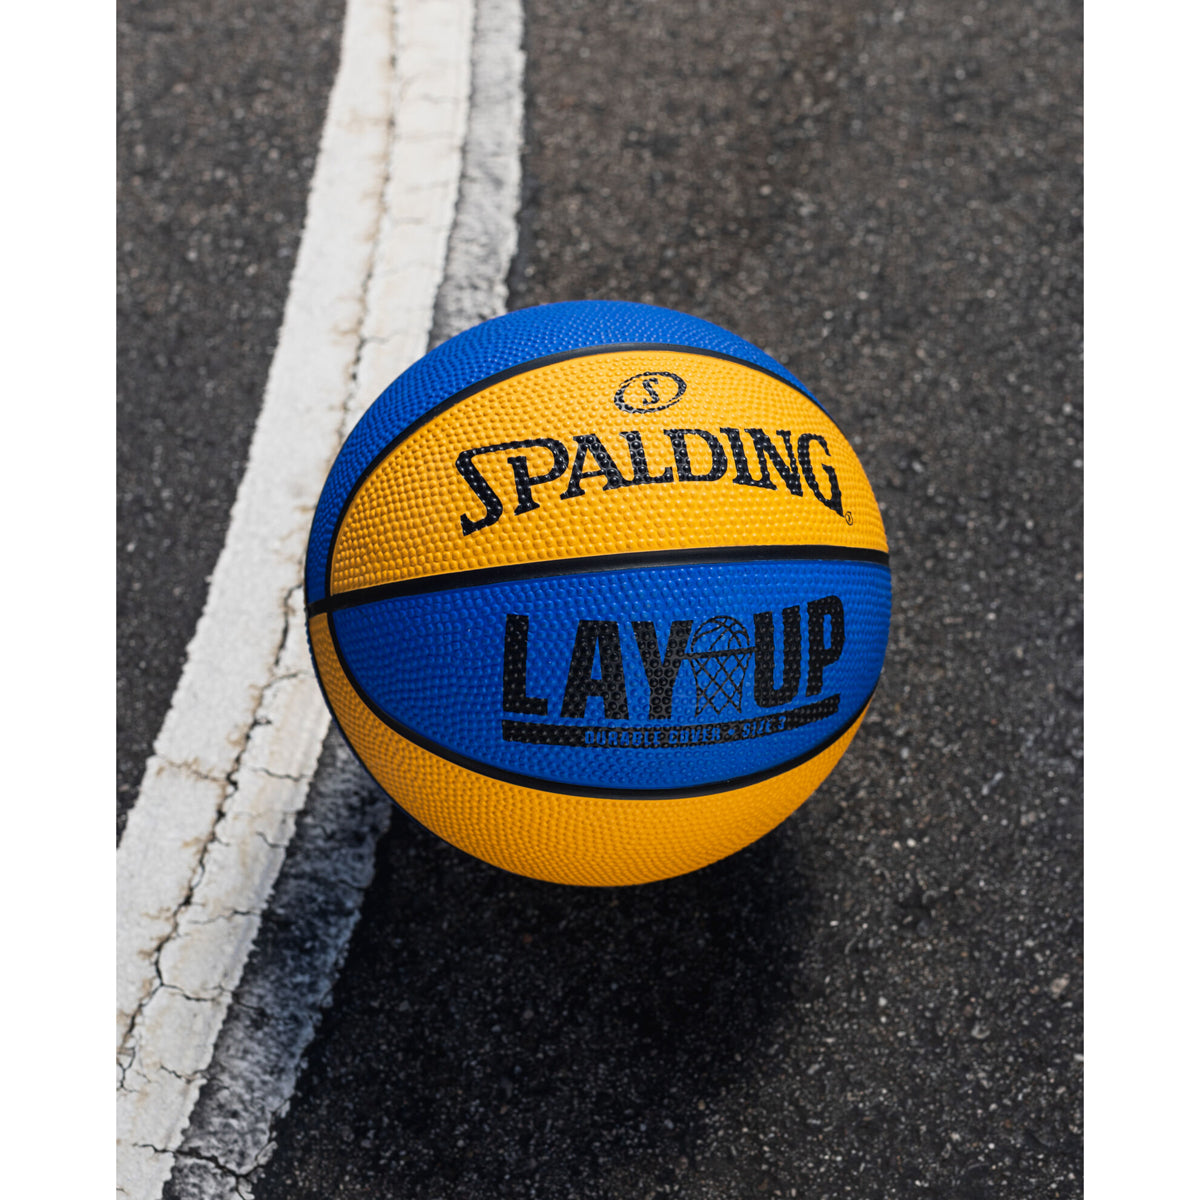 Spalding Layup Mini Rubber Outdoor Basketball Spalding